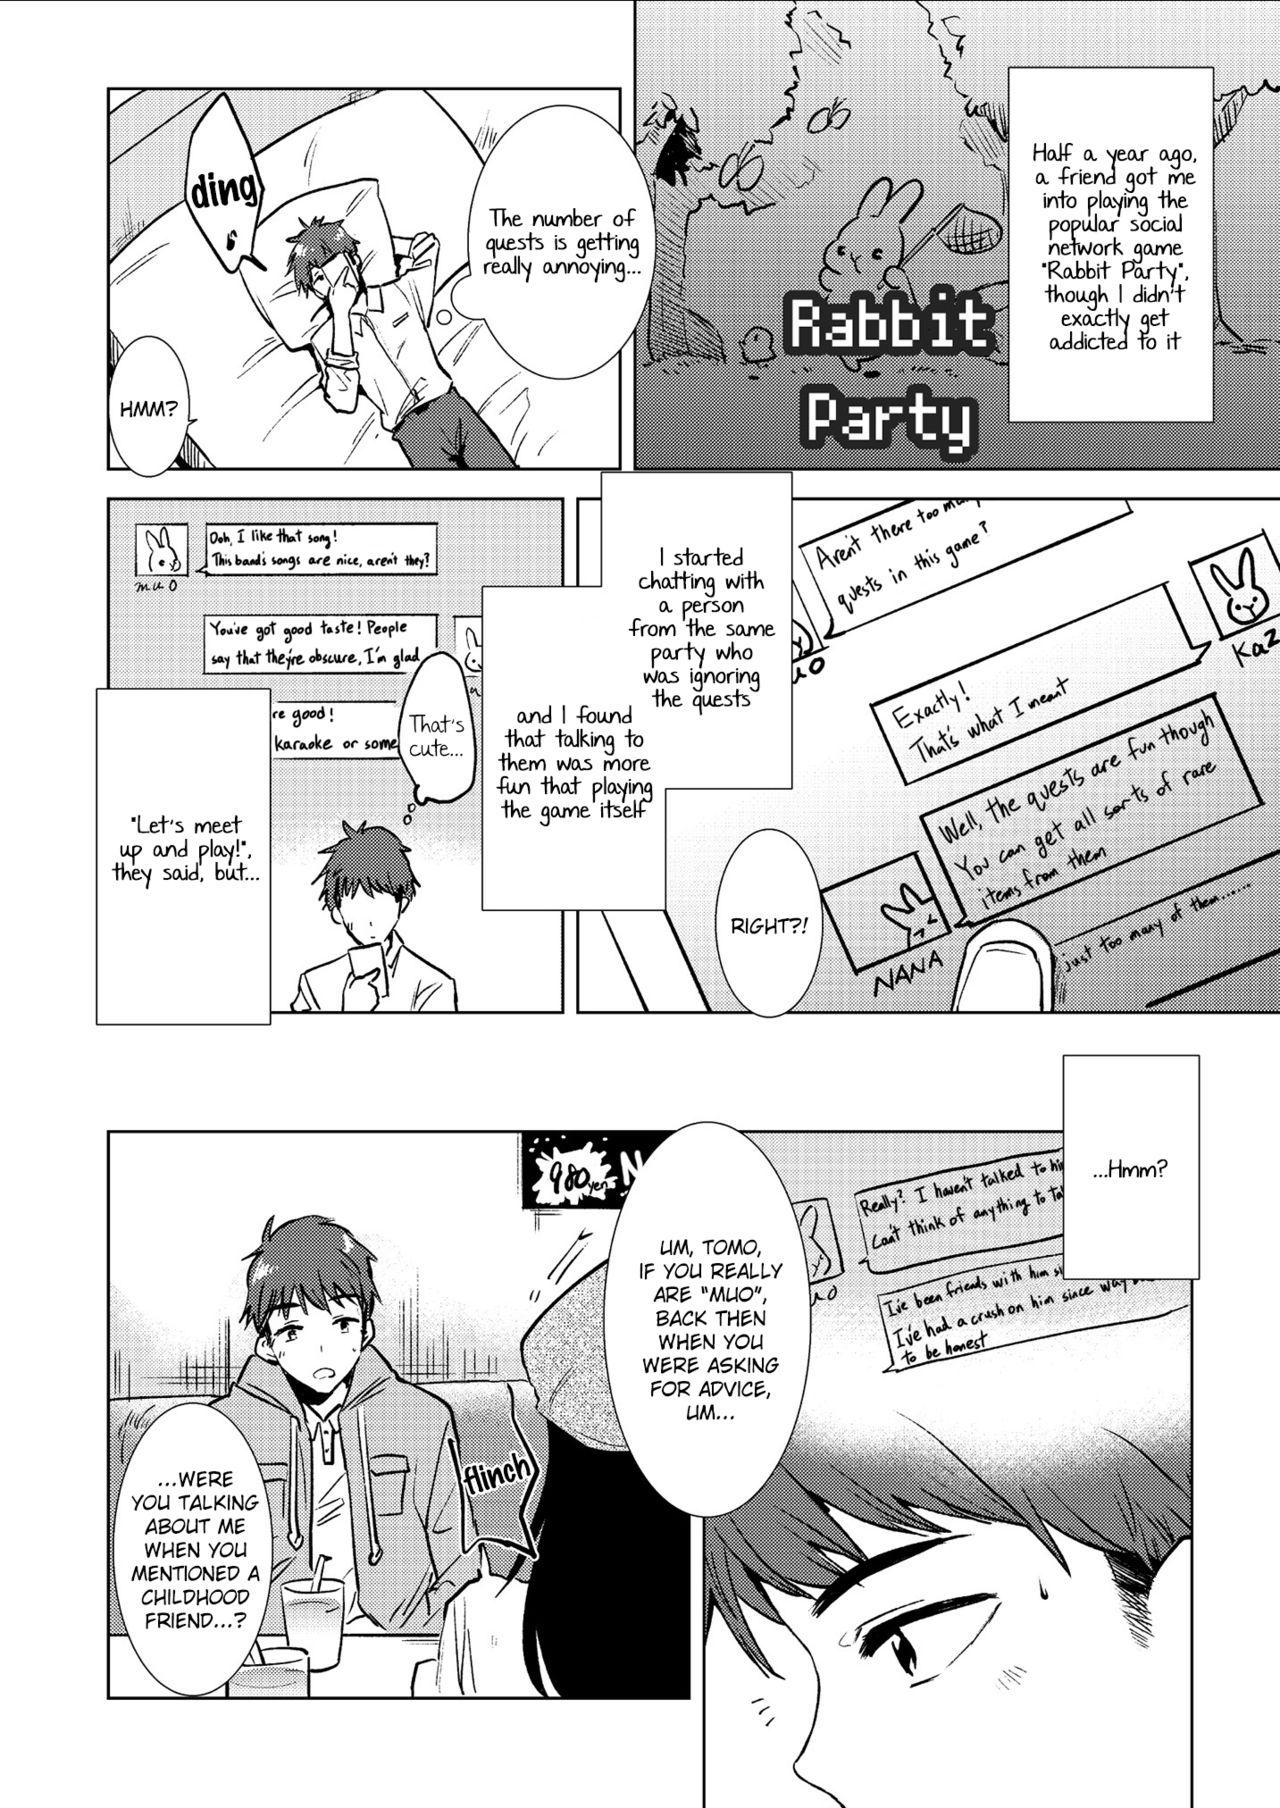 Pauzudo RabbitPartyoffline - Original Gozada - Page 2